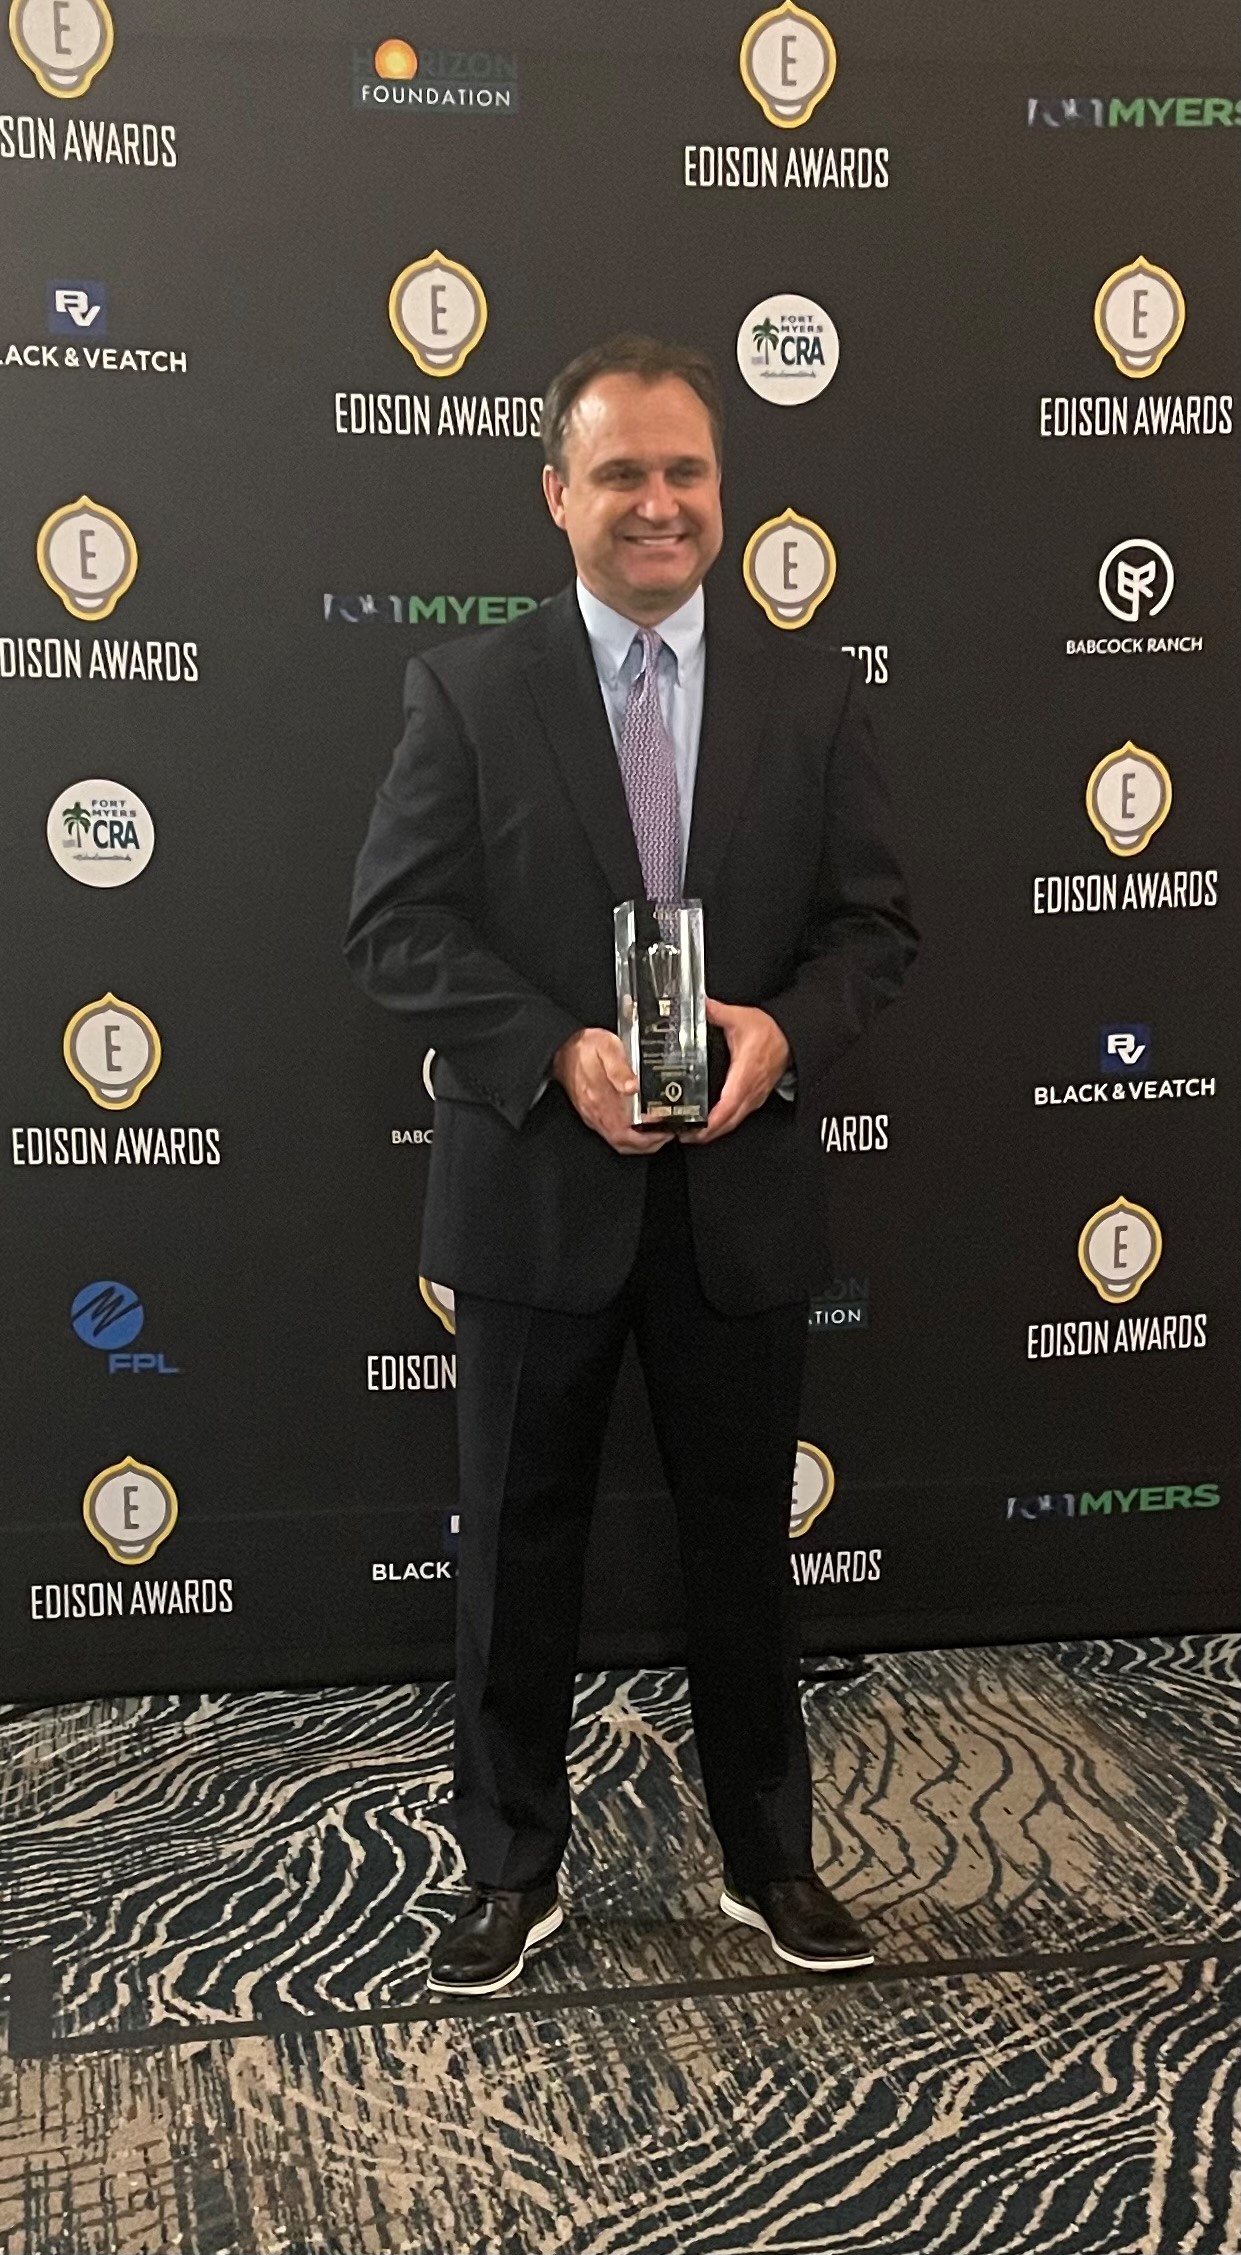 Ron_at_Edison_Awards